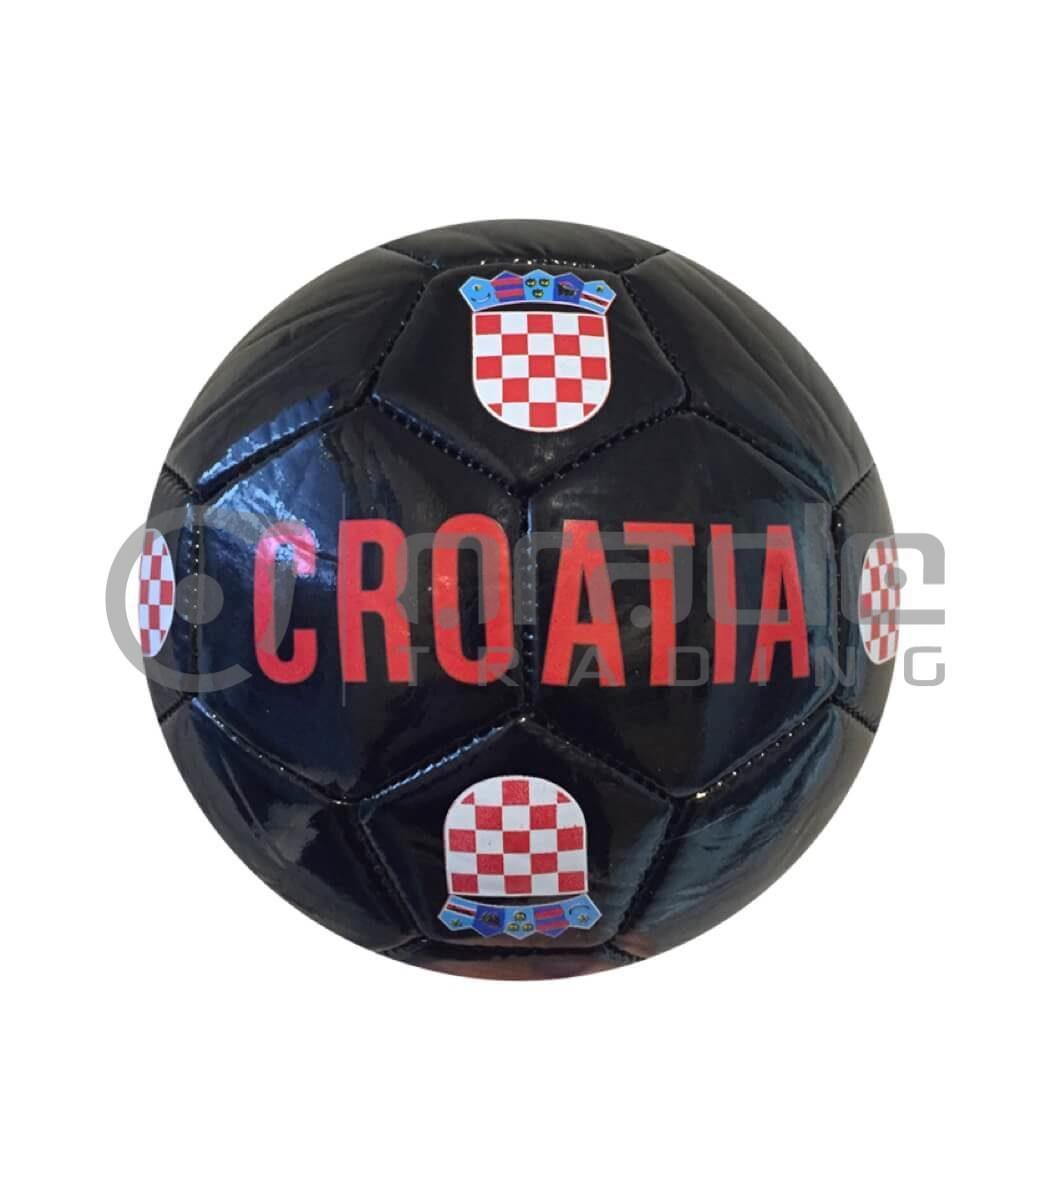 Croatia Small Soccer Ball - Black